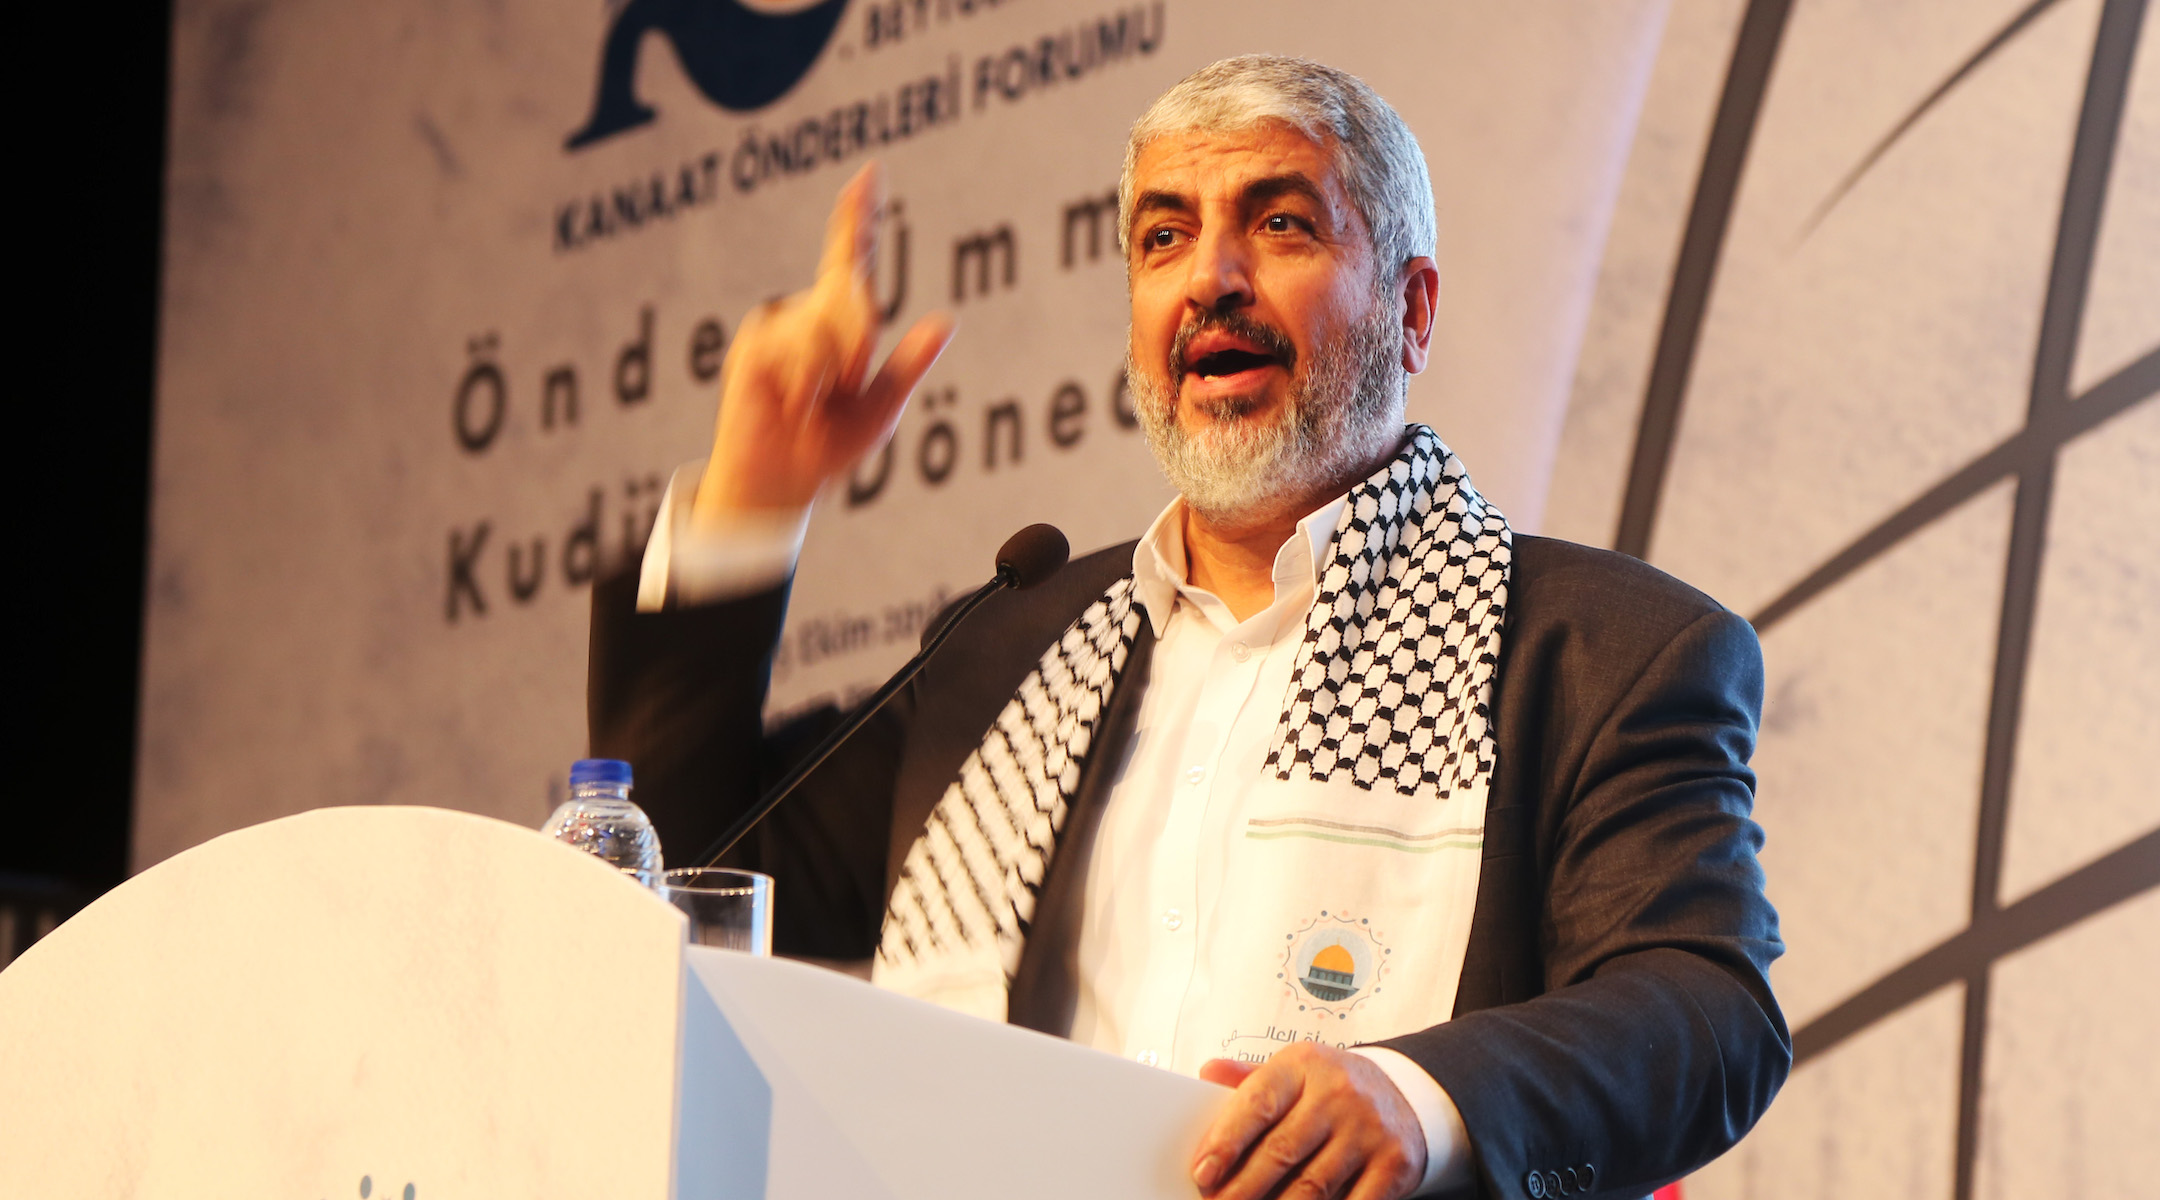 A Hamas leader gives a speech